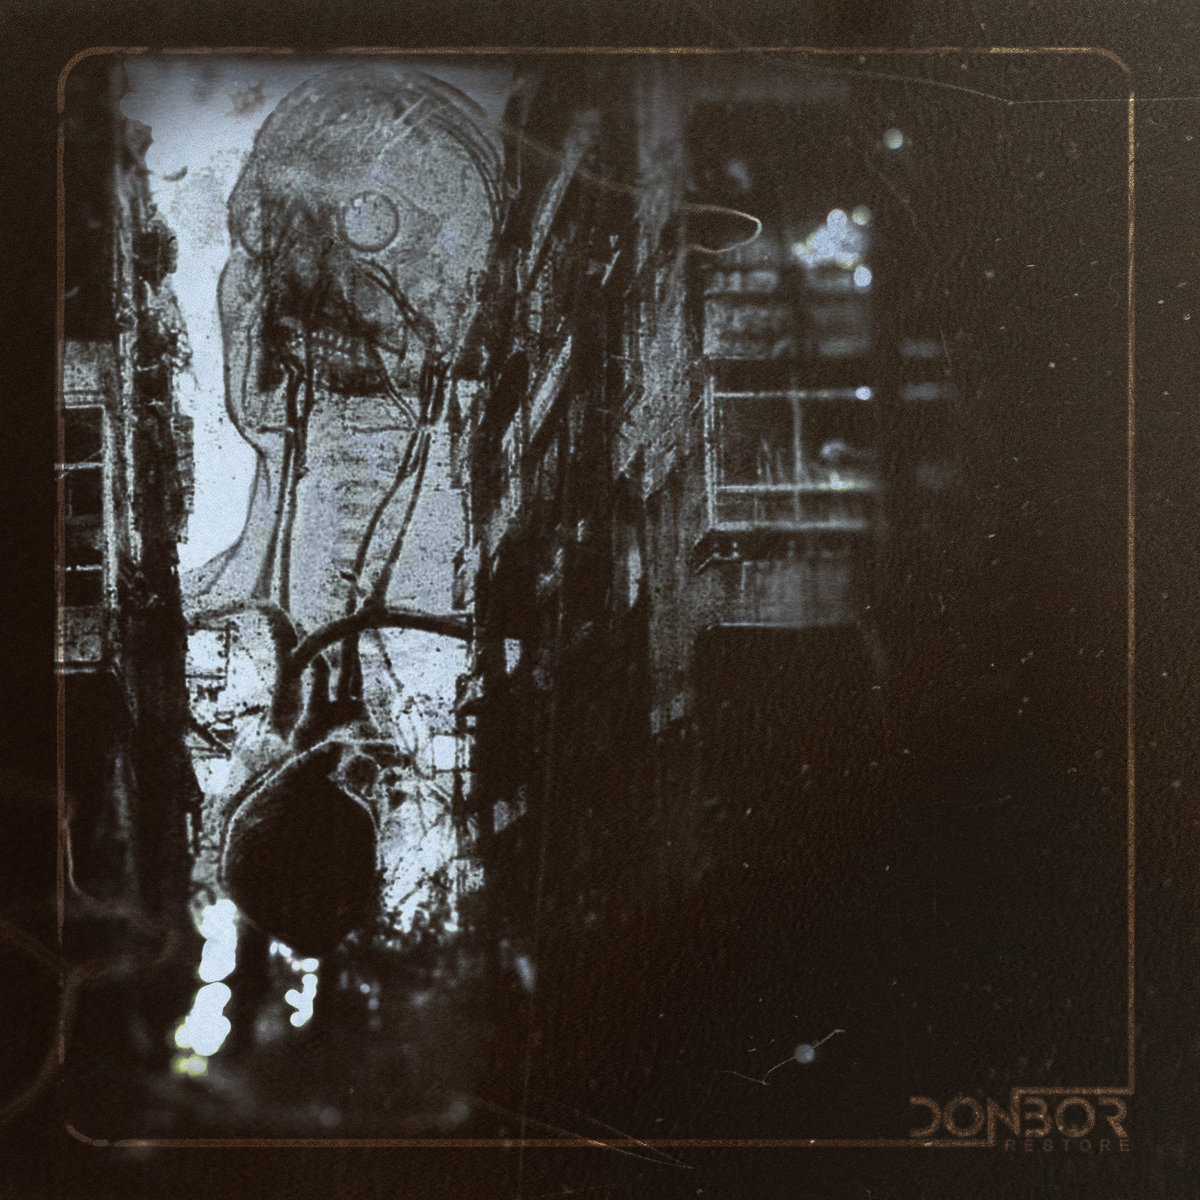 Donbor - Remember (Original Mix)